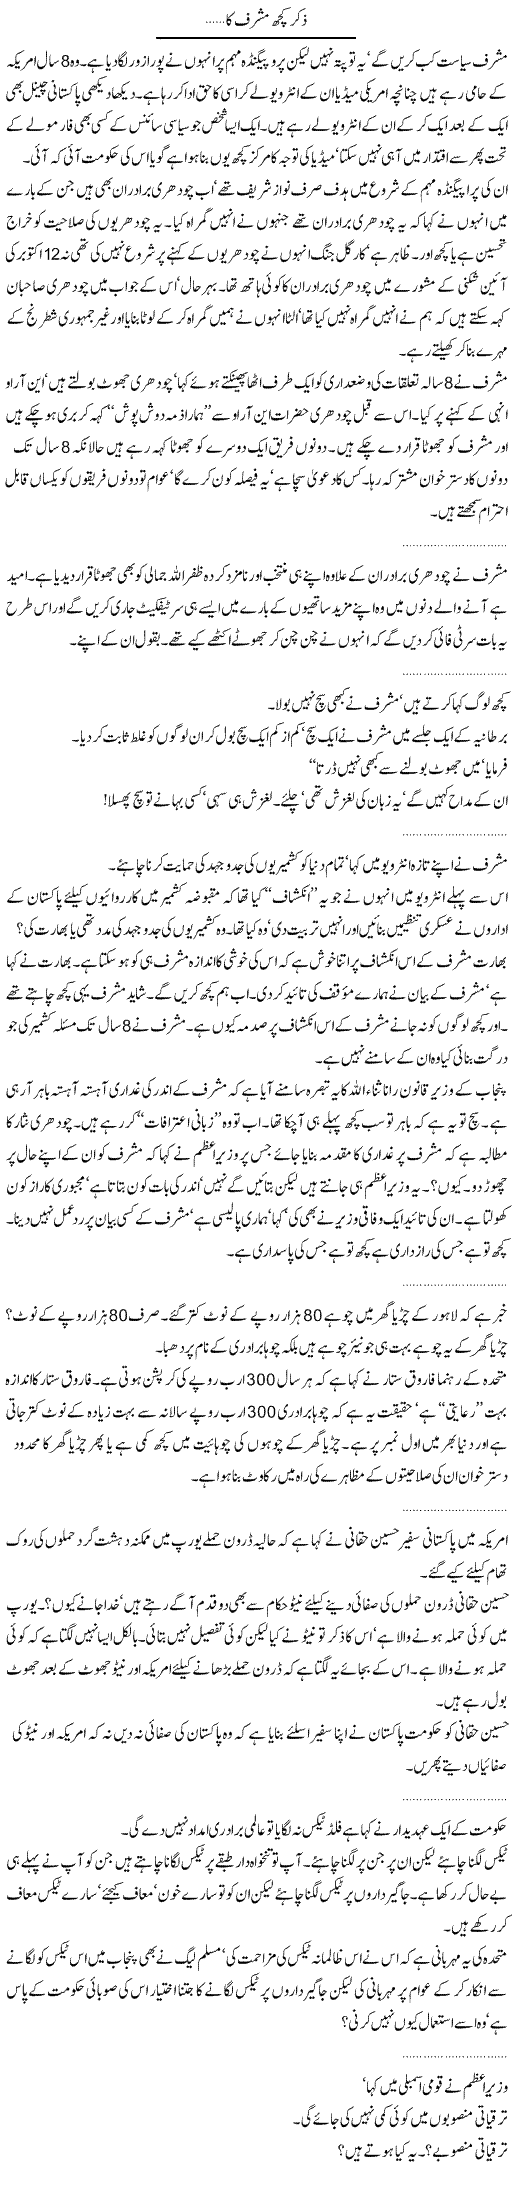 Talk of Musharraf Express Column Abdullah Tariq 8 October 2010